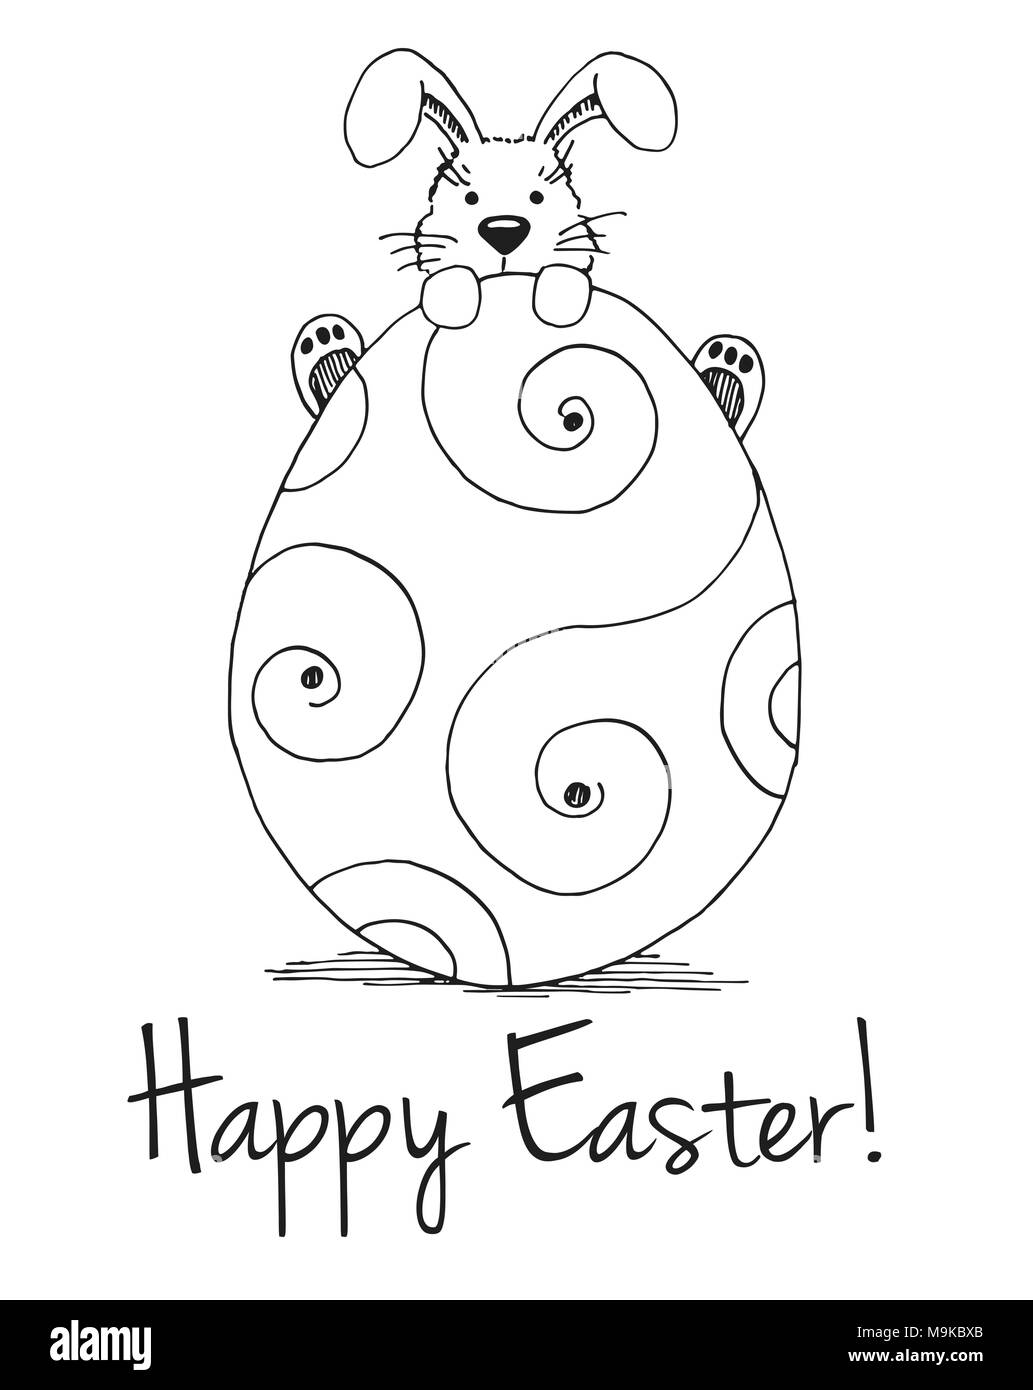 62800 Easter Drawings Illustrations RoyaltyFree Vector Graphics  Clip  Art  iStock